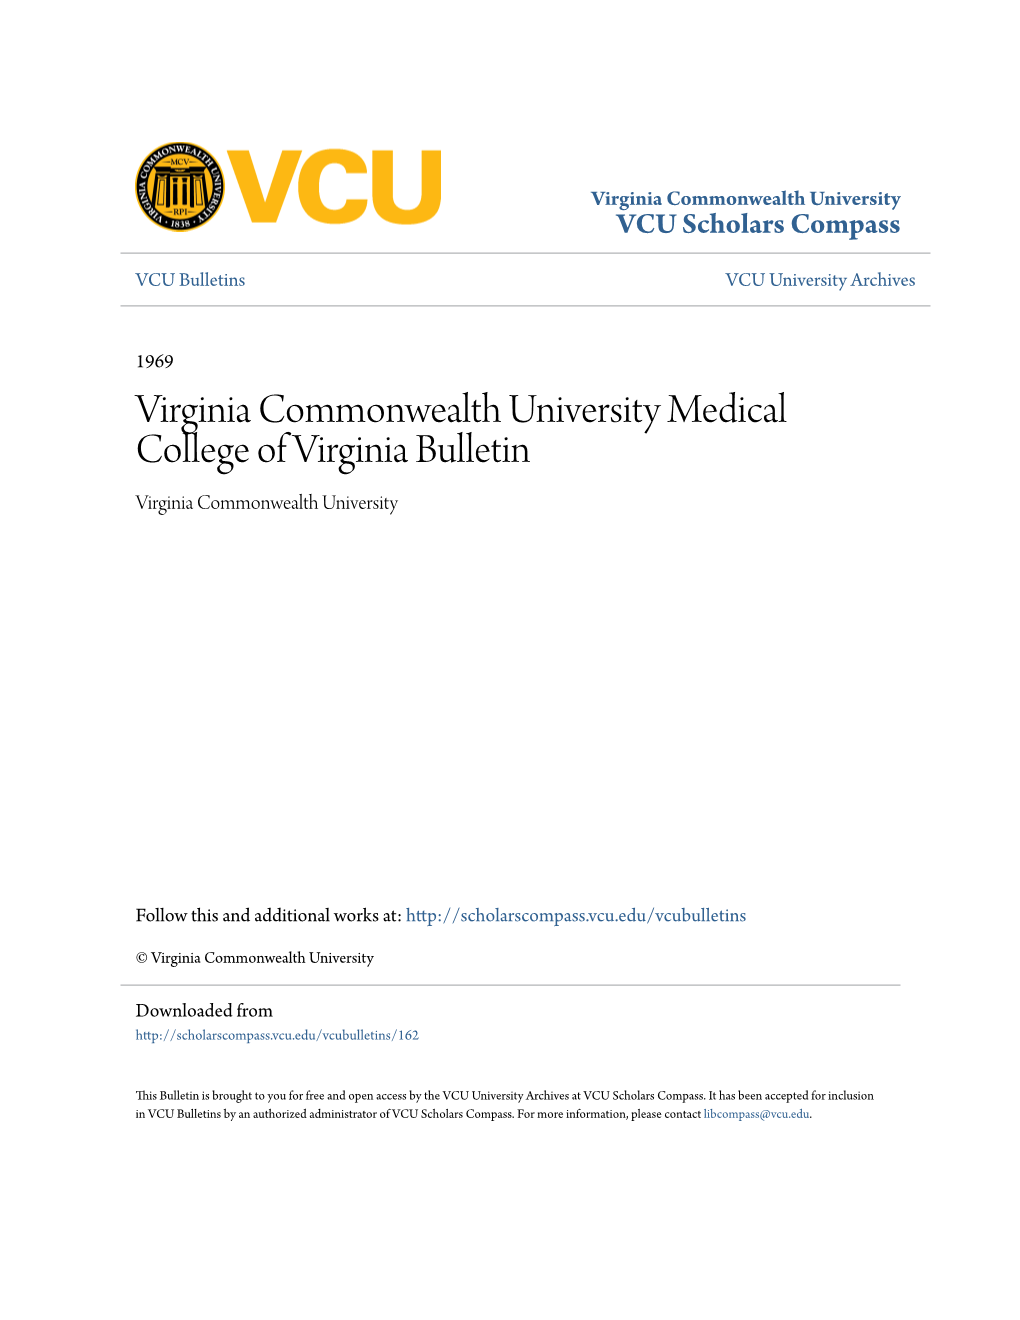 Virginia Commonwealth University Medical College of Virginia Bulletin Virginia Commonwealth University